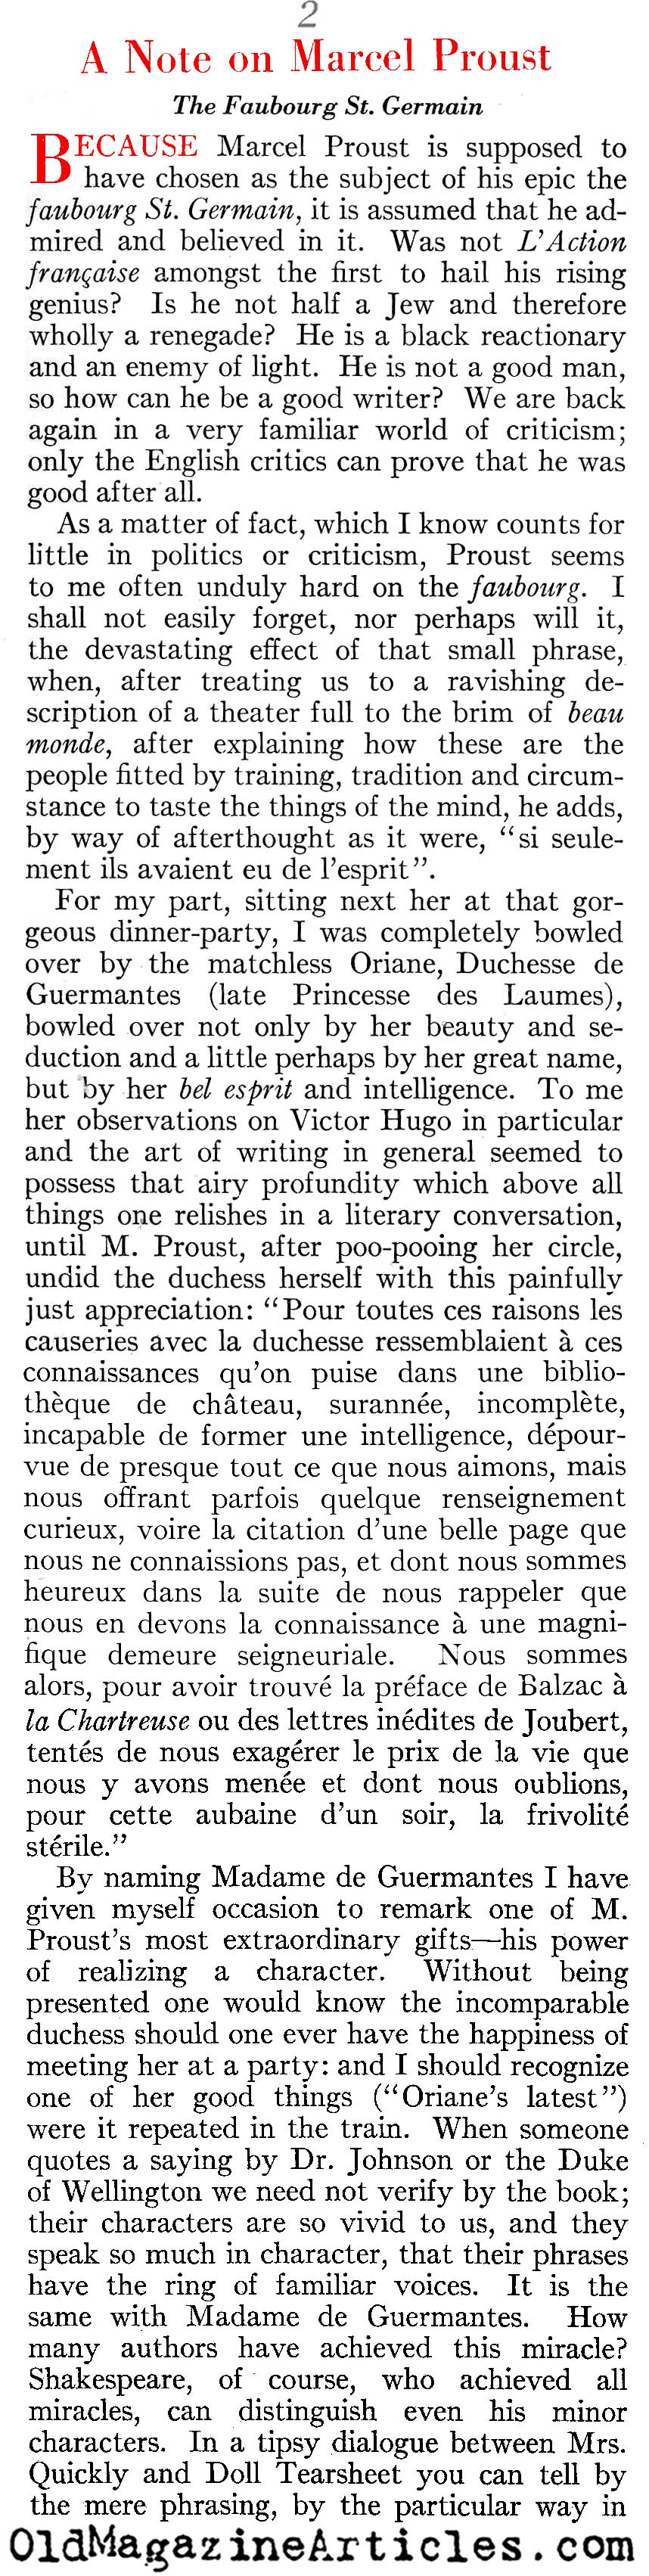 Marcel Proust (Vanity Fair Magazine, 1923)